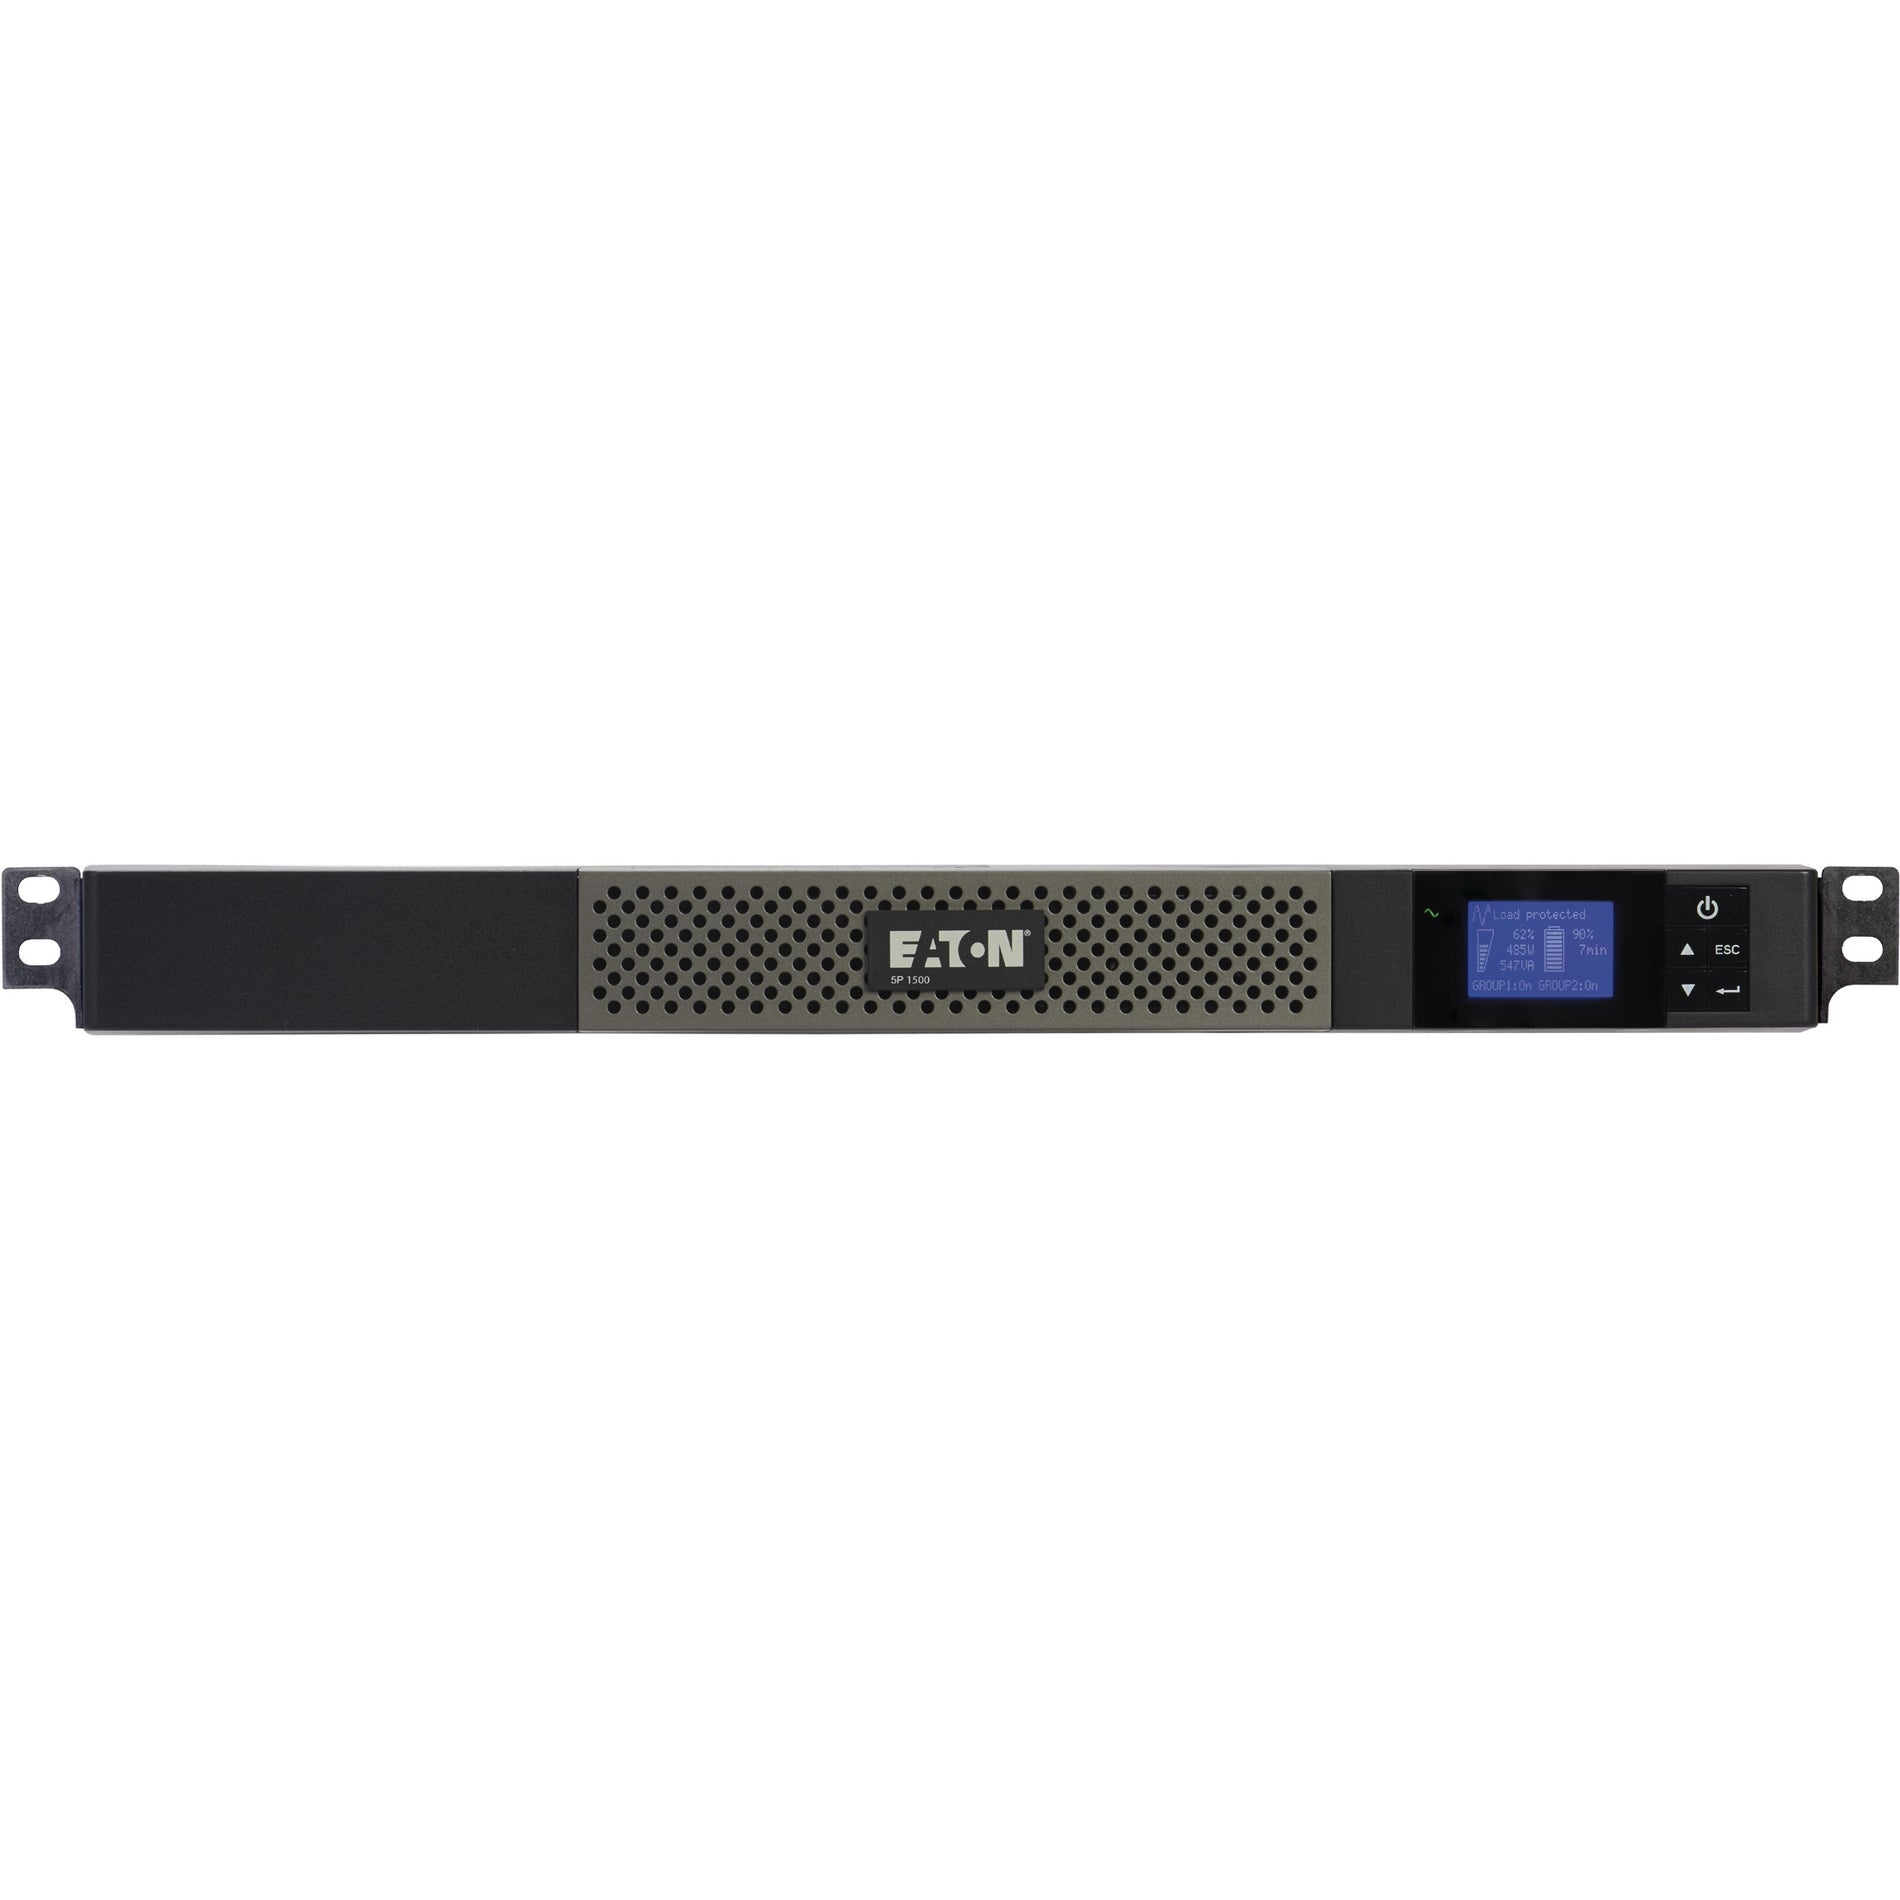 Eaton 5P 5P1500R Rackmount UPS, 1440VA 1100W 120V Line-Interactive UPS, True Sine Wave, Cybersecure Network Card Option